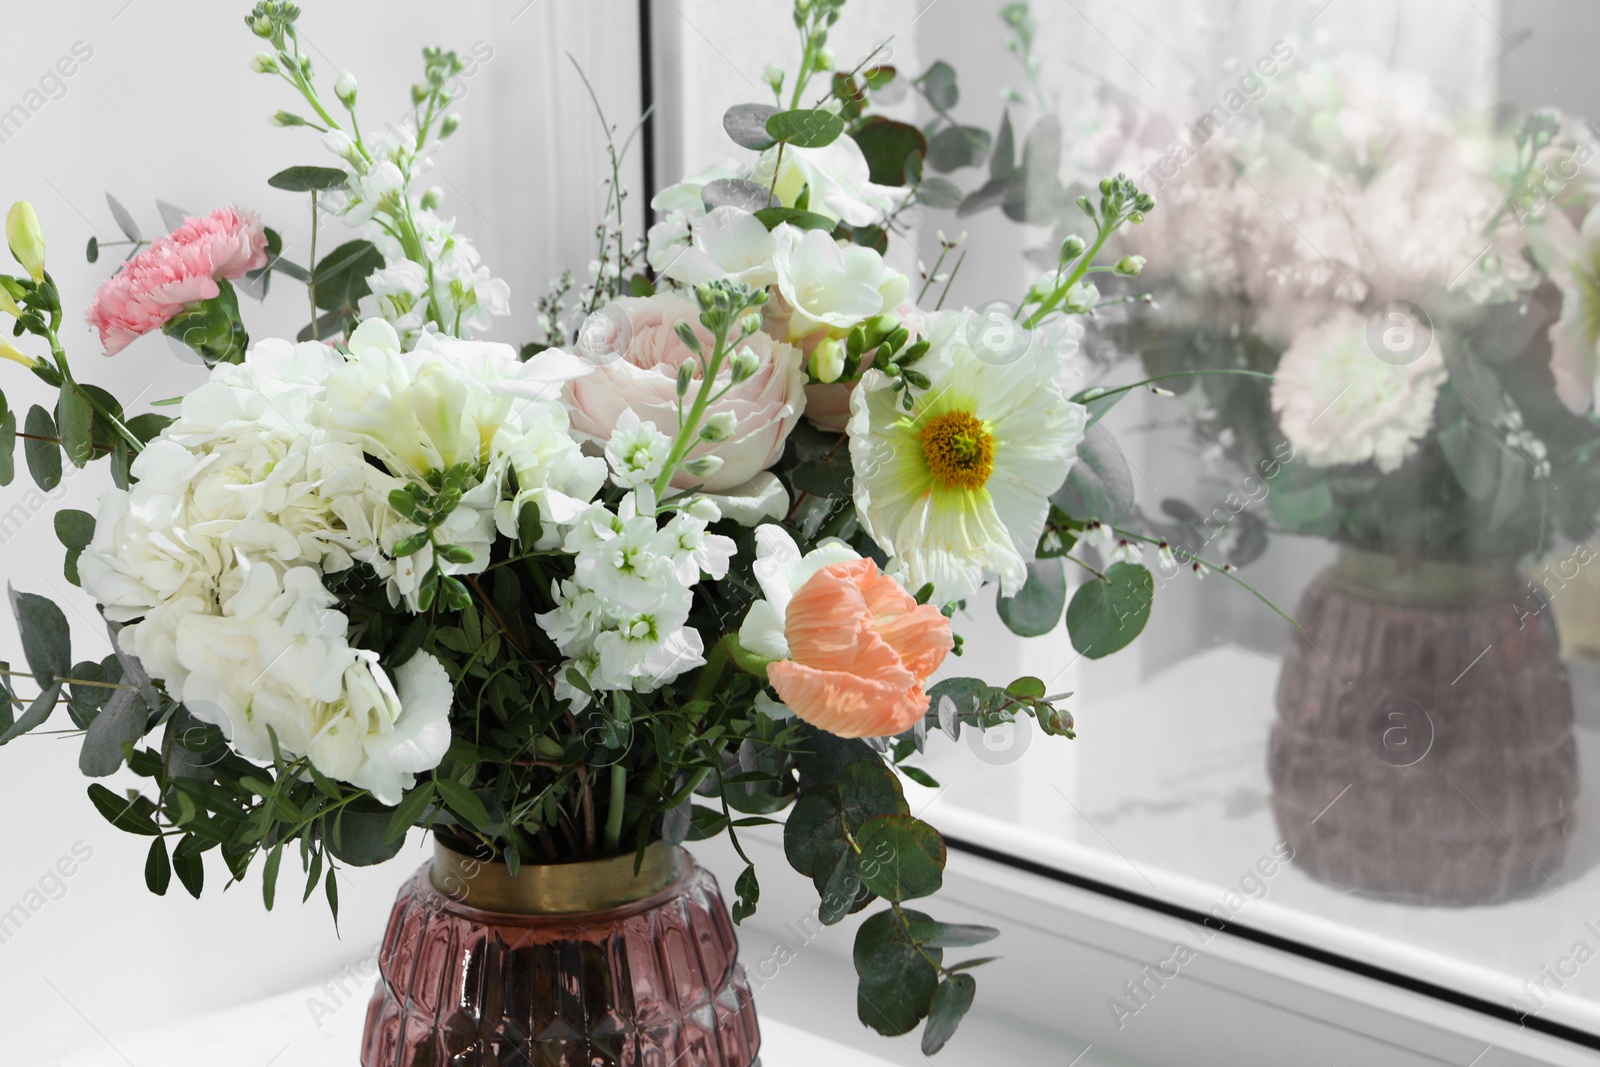 Photo of Bouquet of beautiful flowers near window indoors